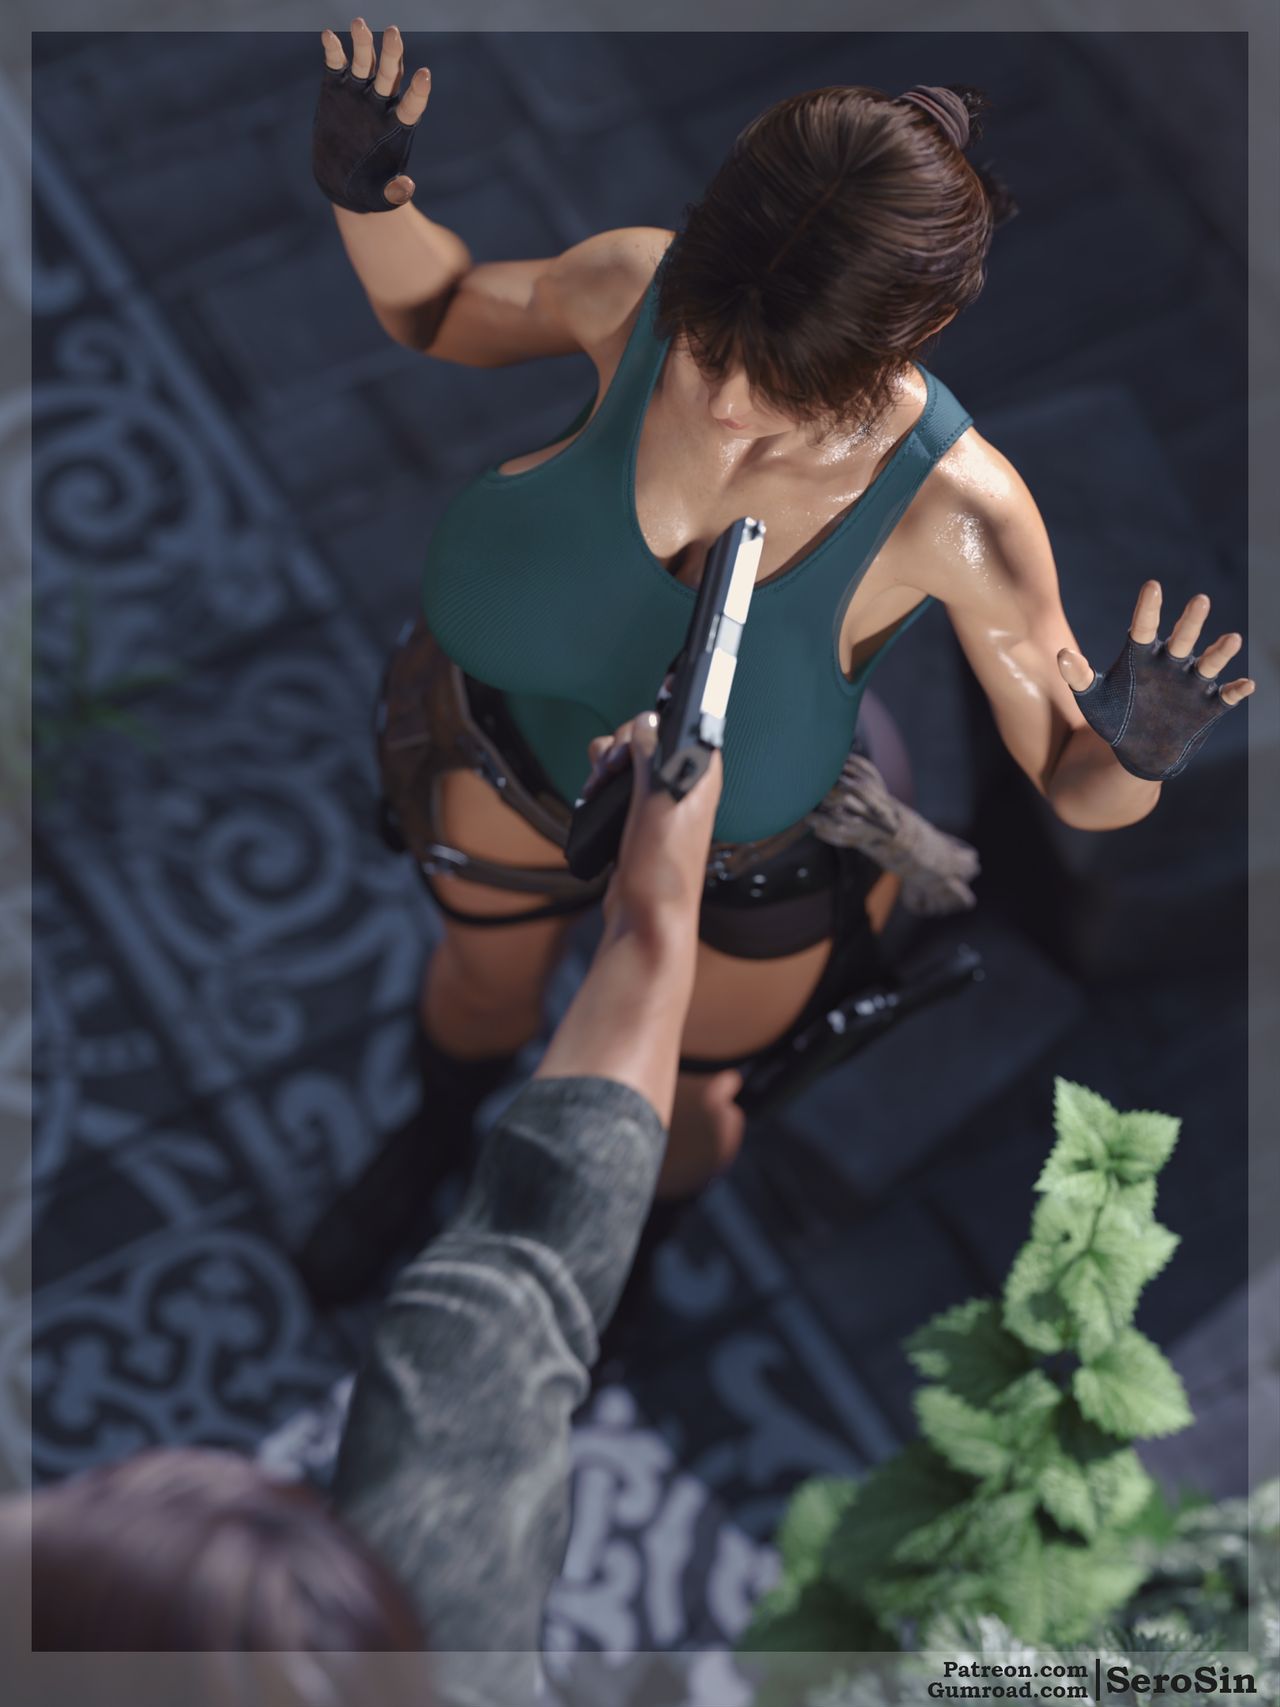 [SeroSin] Lara Croft: Captured 8